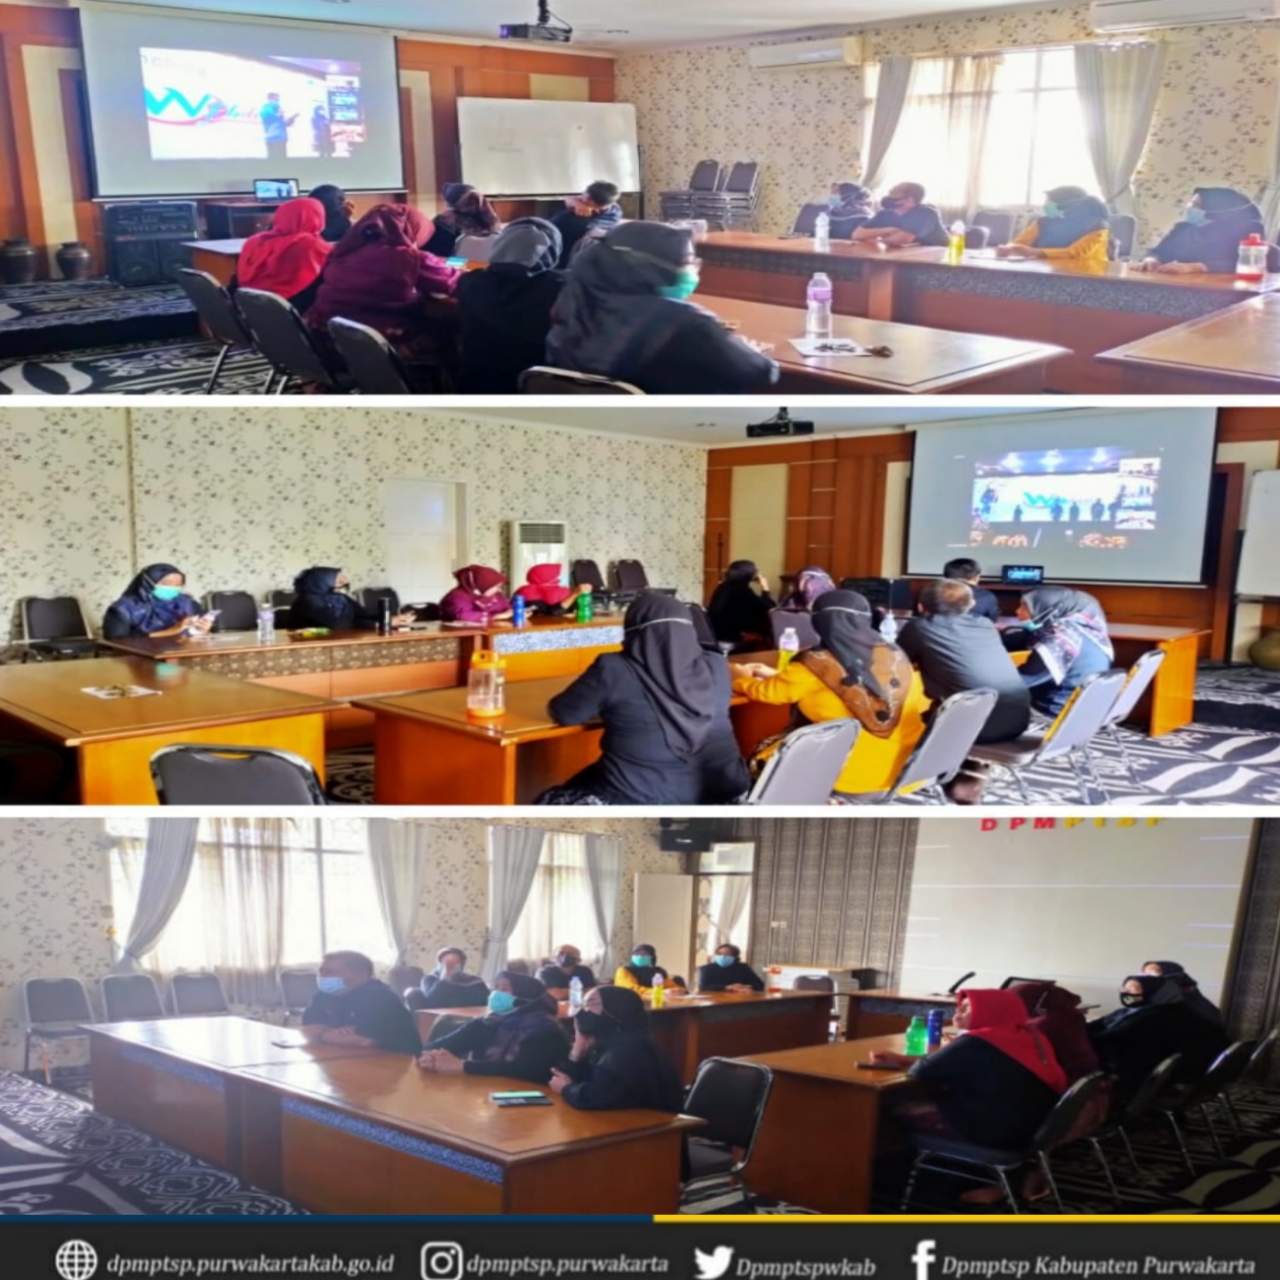 Rabu, (24/02/2021) Pegawai DPMPTSP mengikuti acara Launching Web Desaku yang diselenggarakan oleh DISKOMINFO via Zoom Meeting bertempat di Aula DPMPTSP Purwakarta